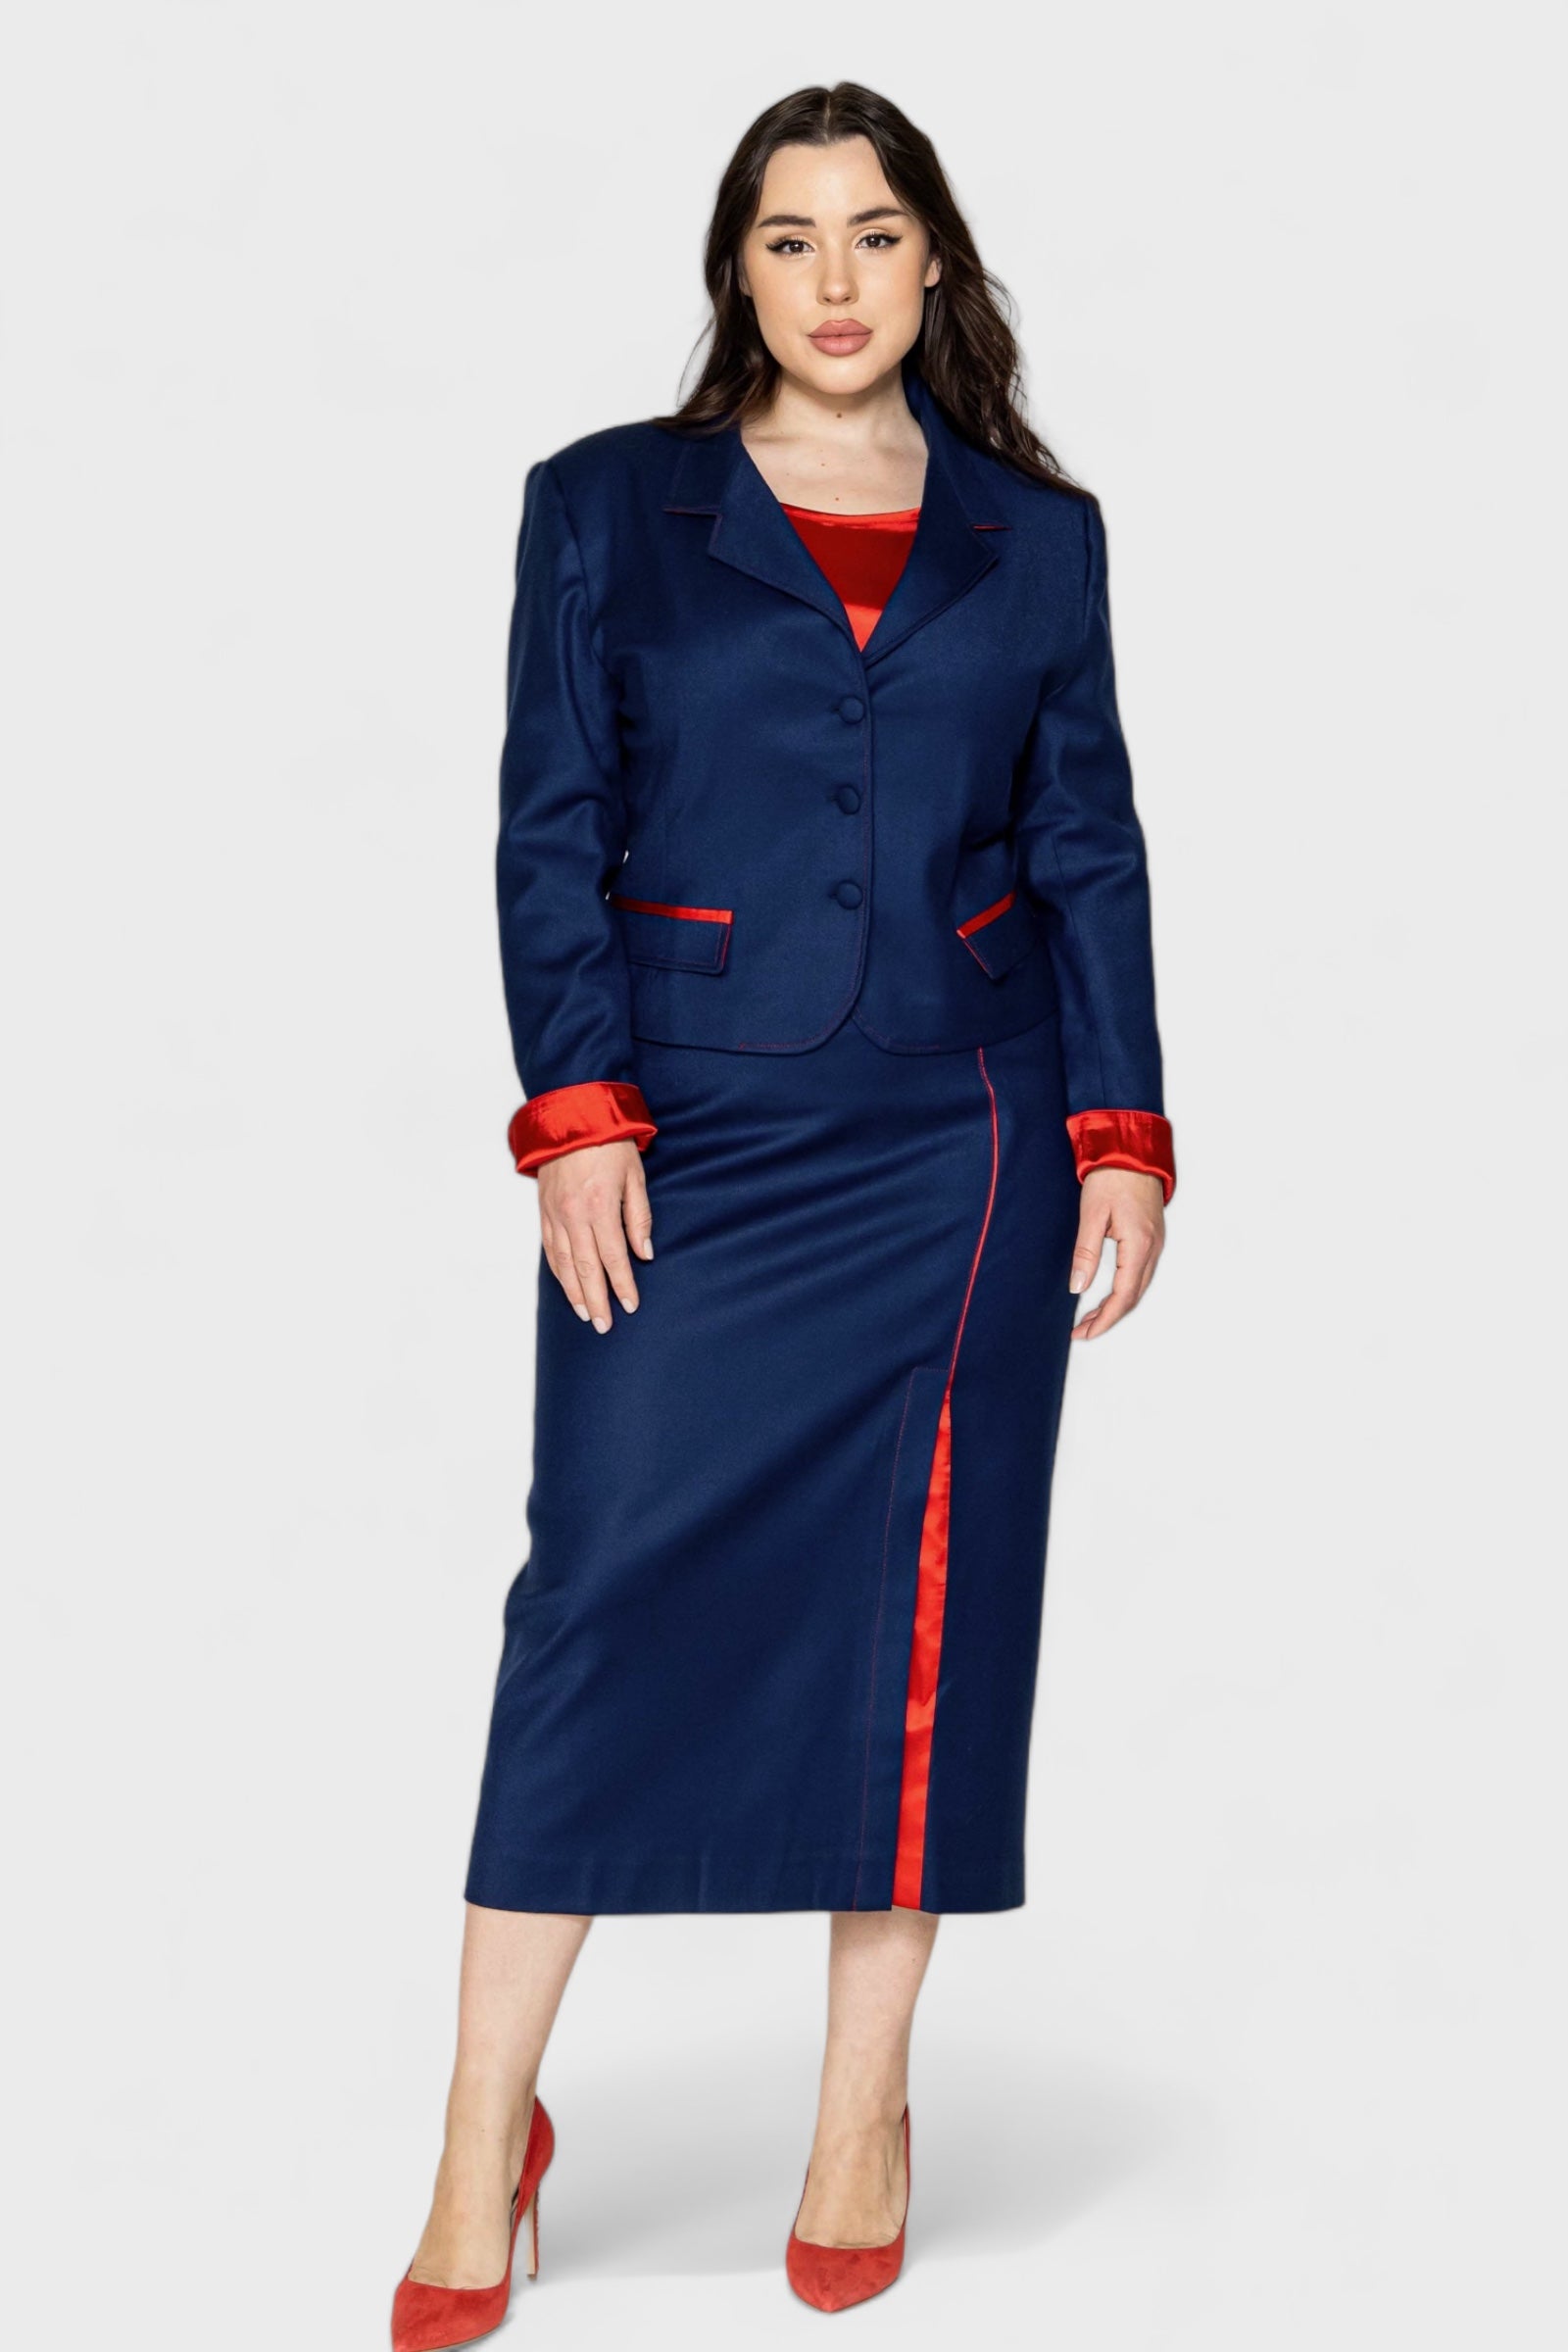 Ravenna Plus Size Blue Jacket & Midi Skirt Suit Set by Sara Sabella Italian Women's Fashion